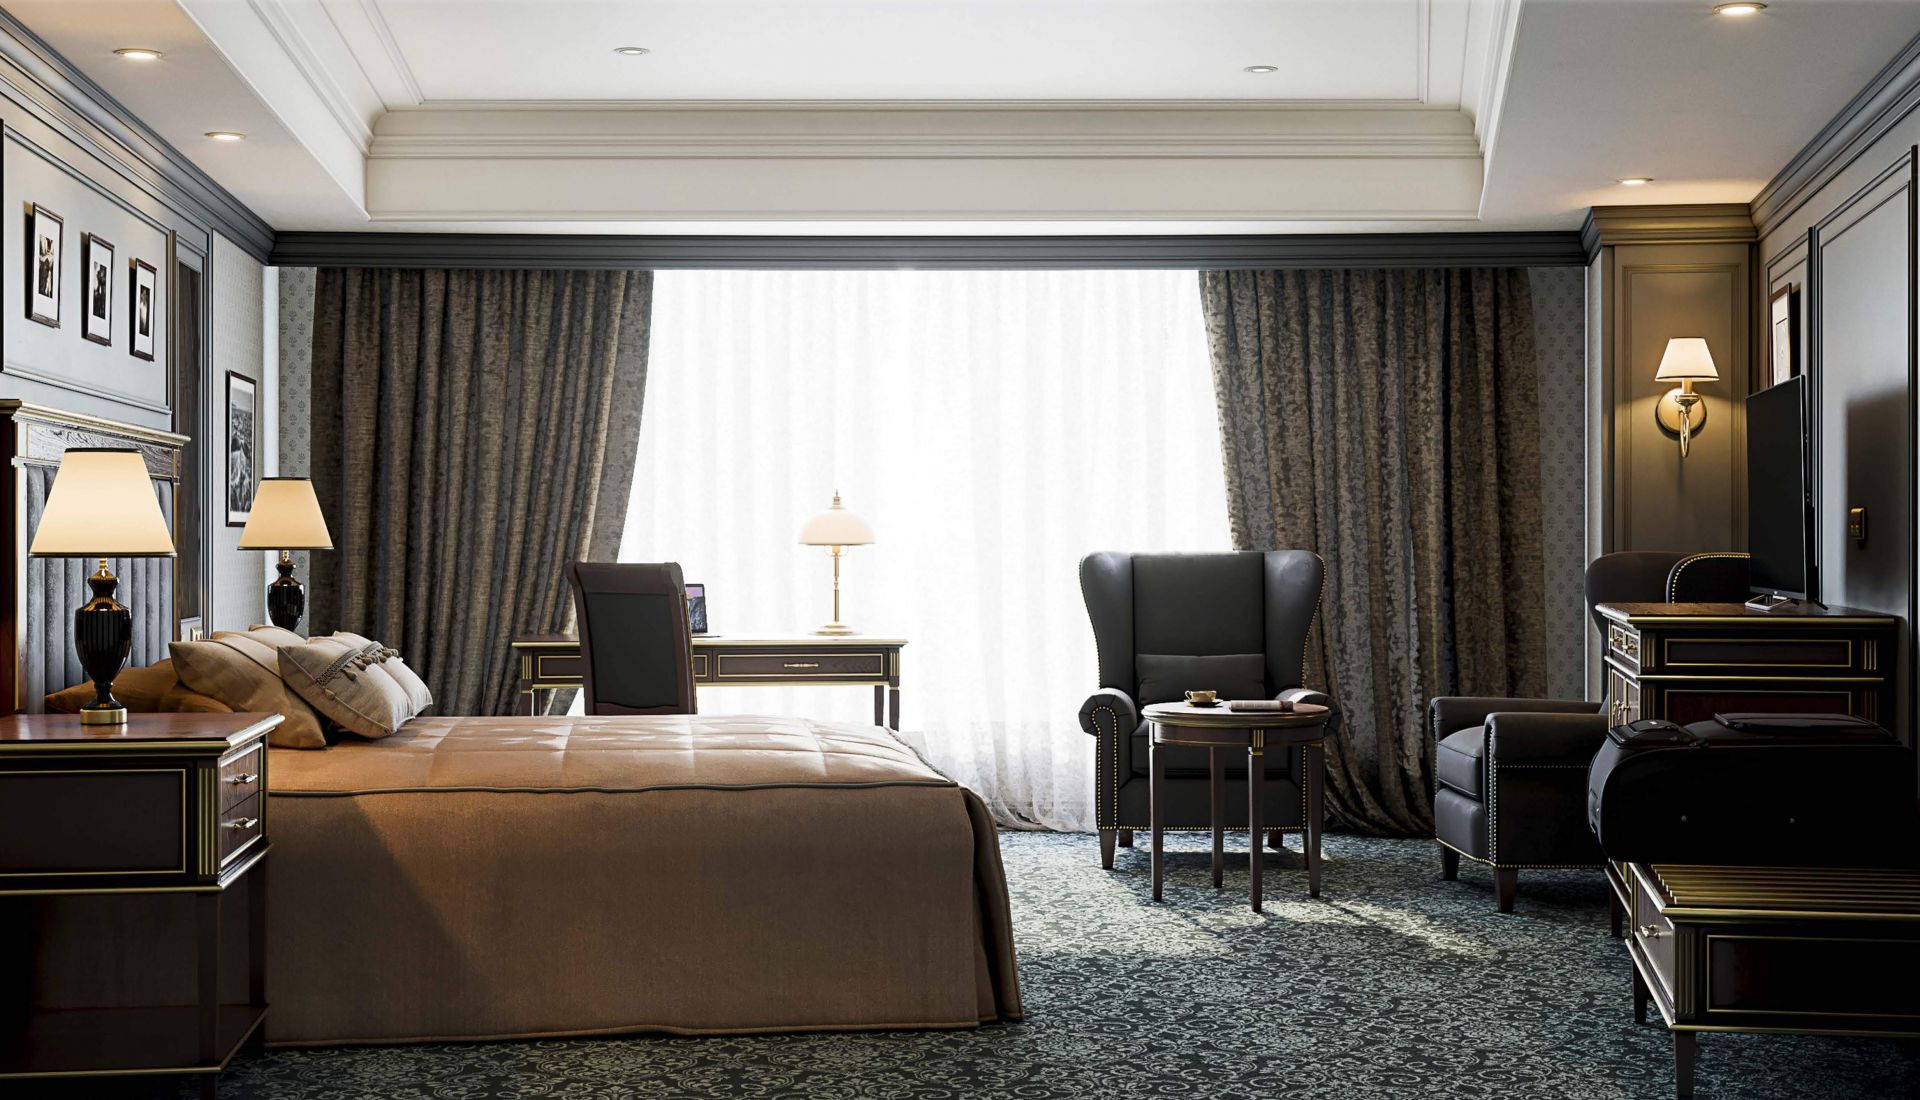 Design, Hotel Room in the Diplomat Hotel